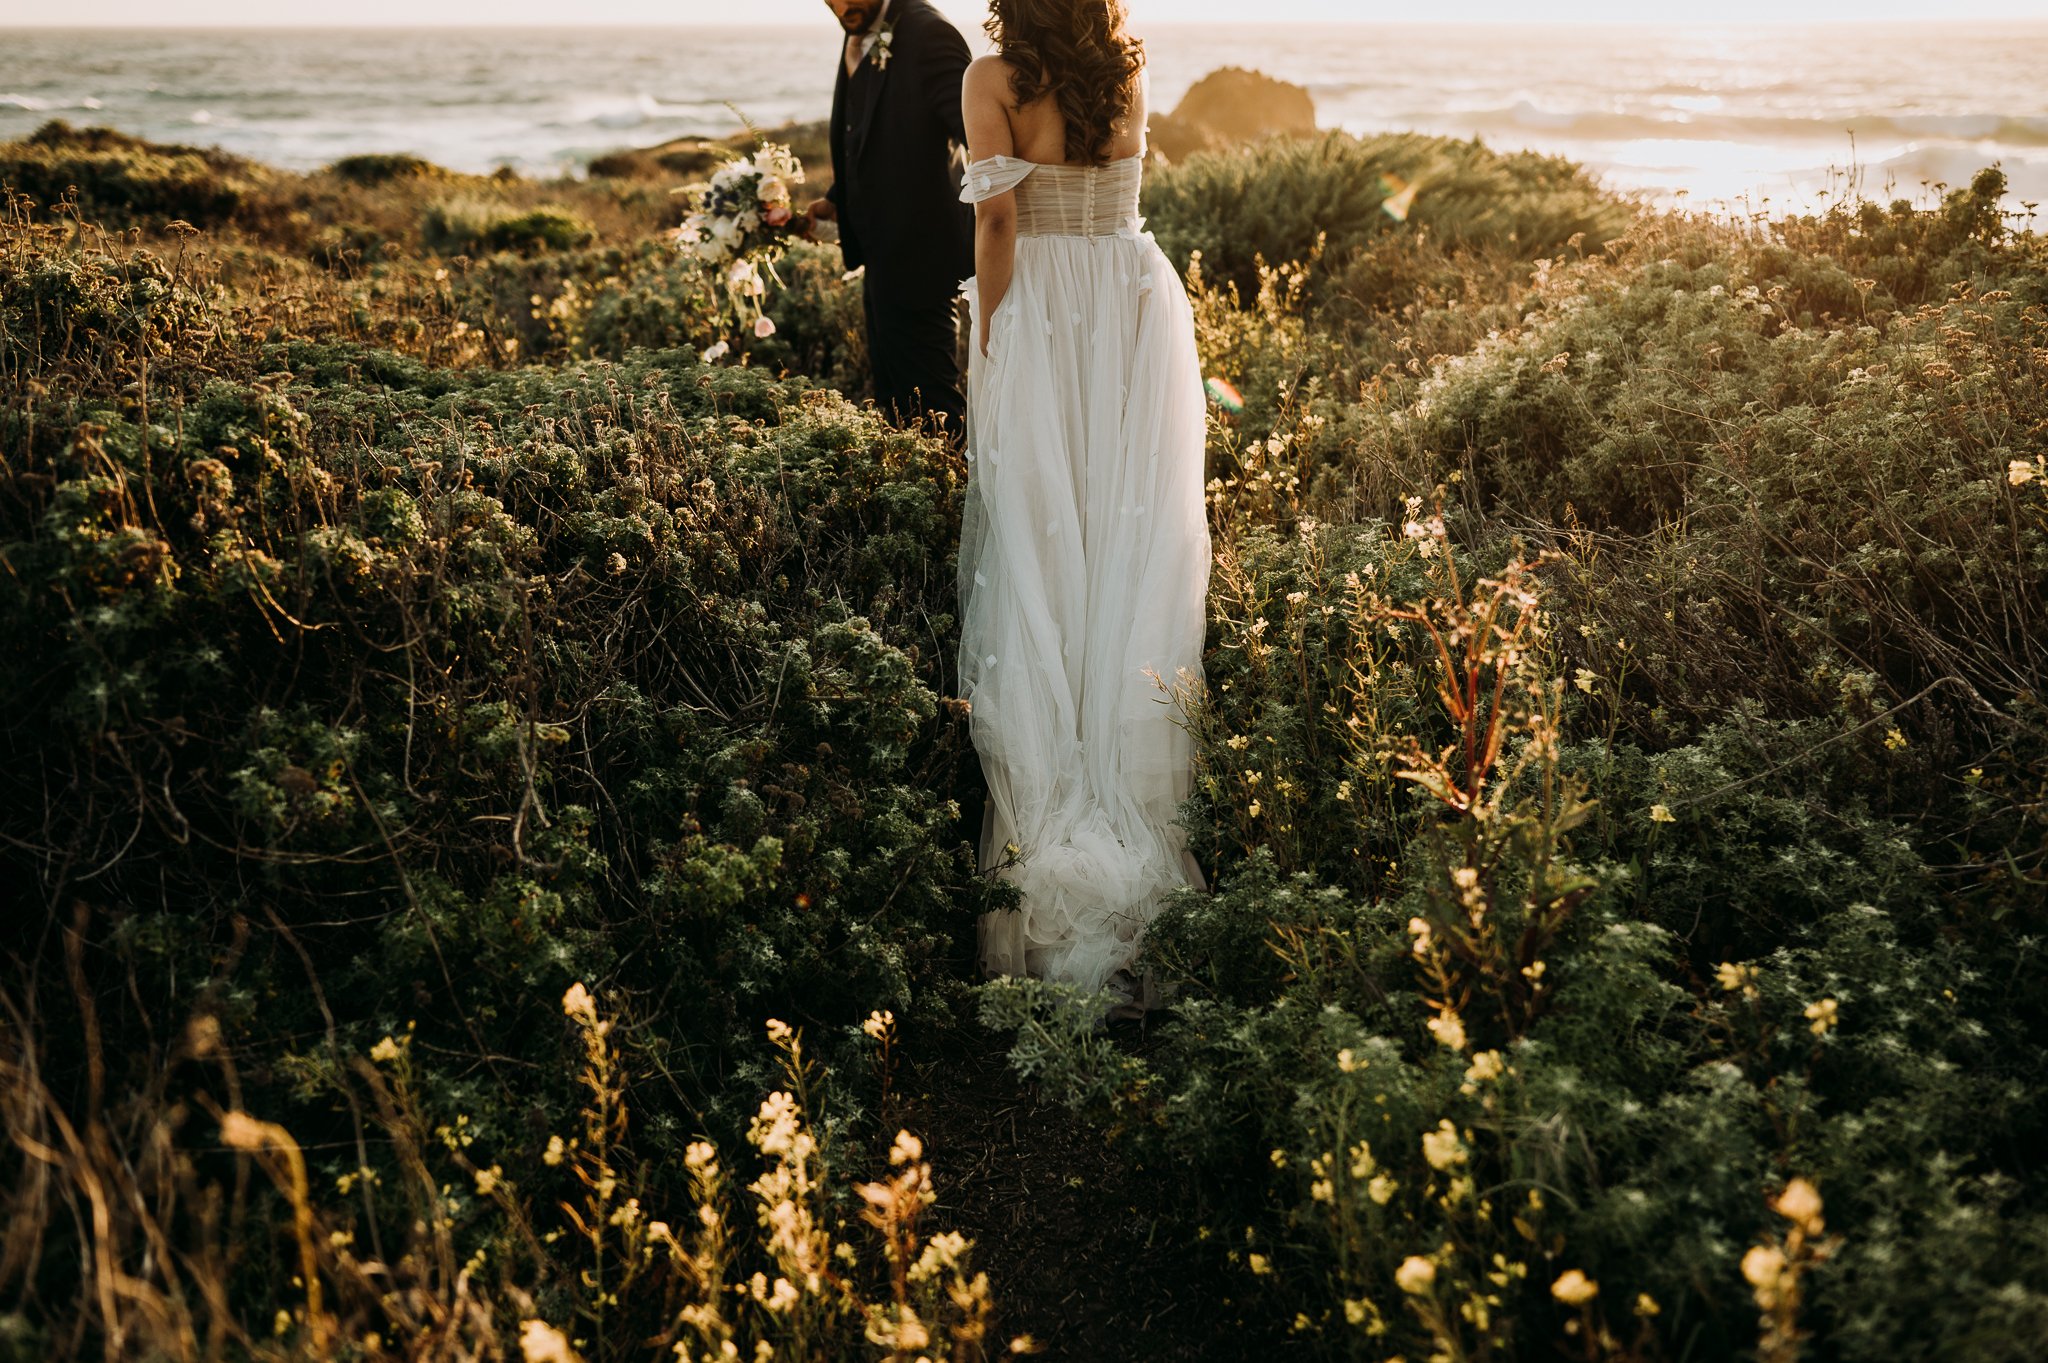 Big Sur Wedding bride and groom in wedding attire walking in field of flowers hand and hand toward Pacific Ocean